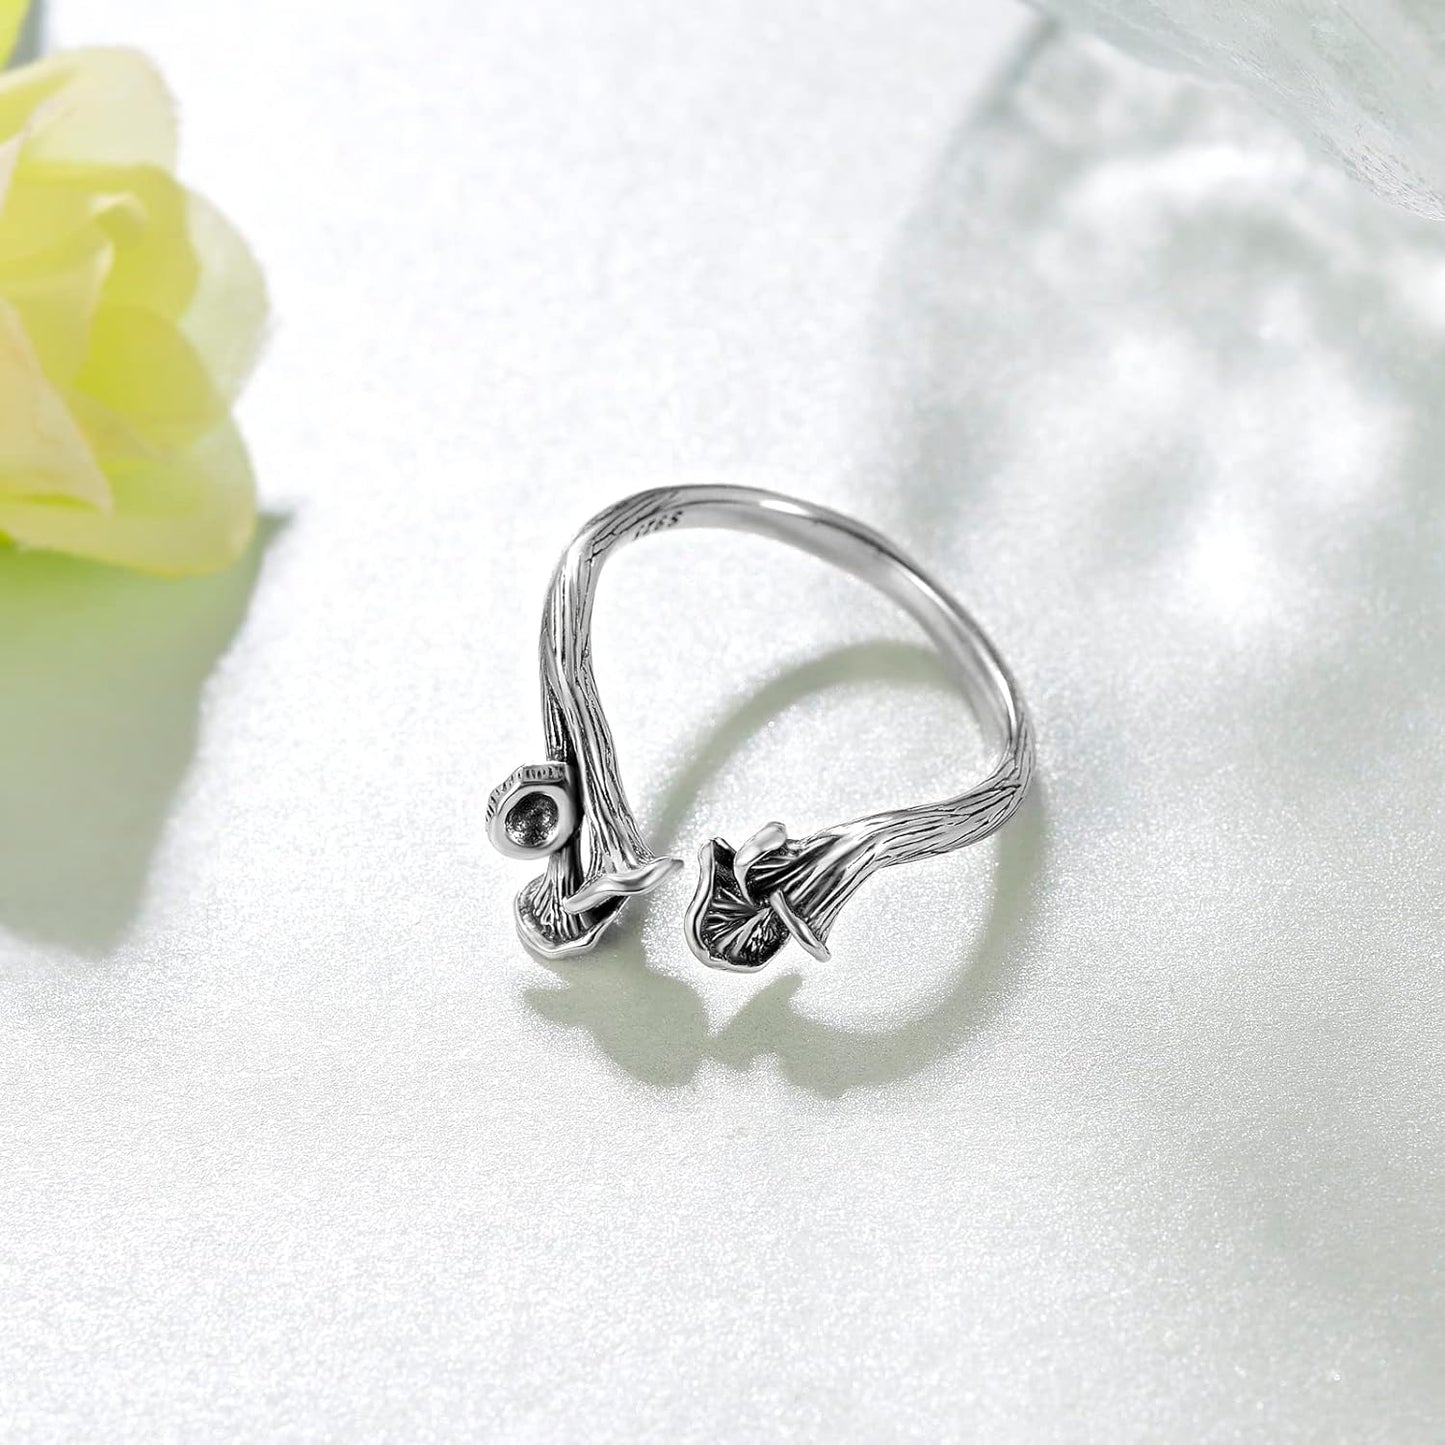 Chanterelle Mushroom Rings for Women Sterling Silver Vintage Cute Adjustable Open Wrap Ring Jewelry